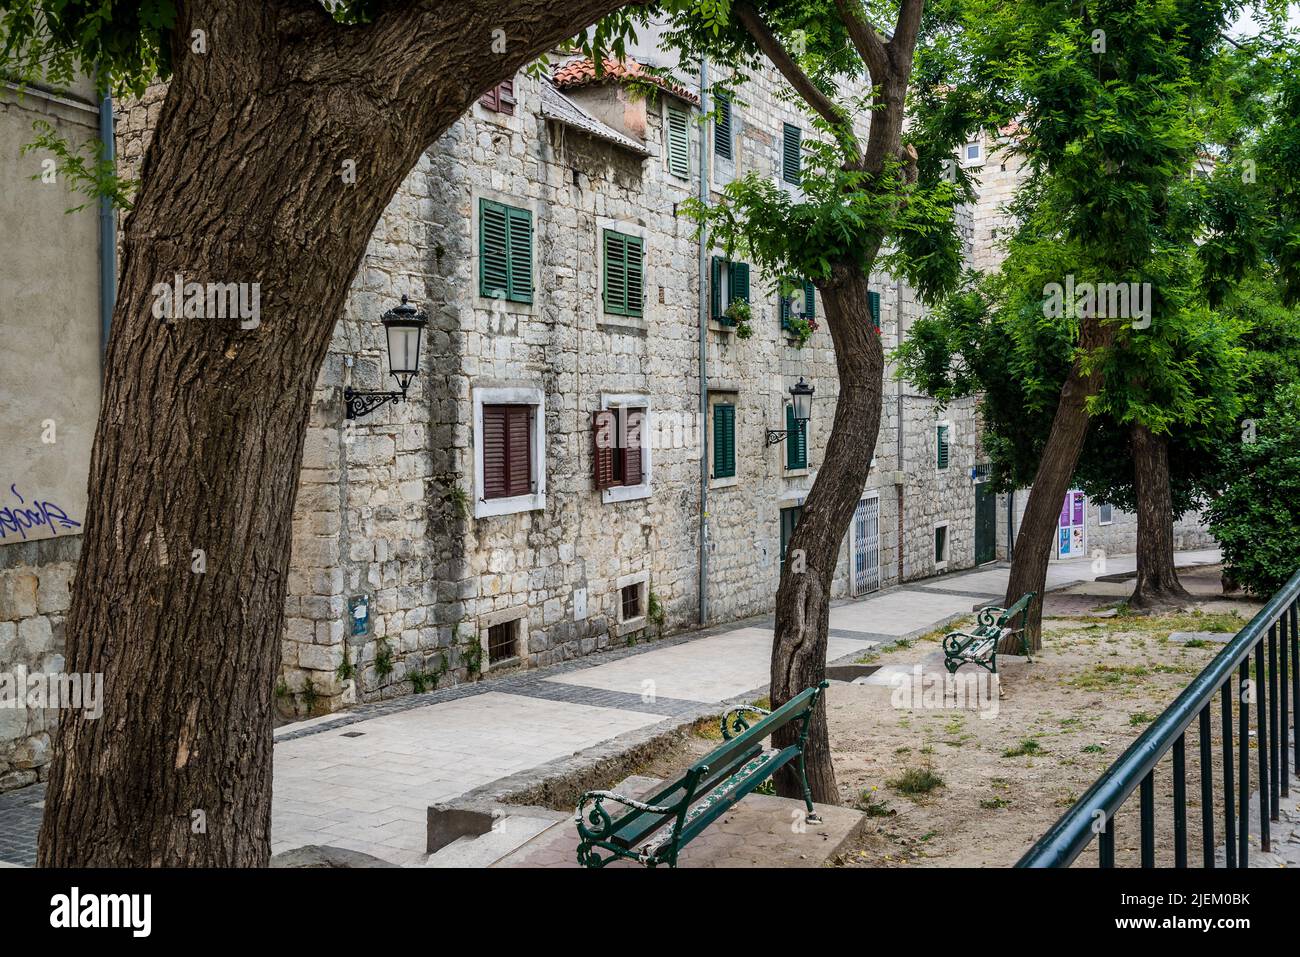 Street in Radunica, a historic and charming downtown neighbourhood, Split, Croatia Stock Photo